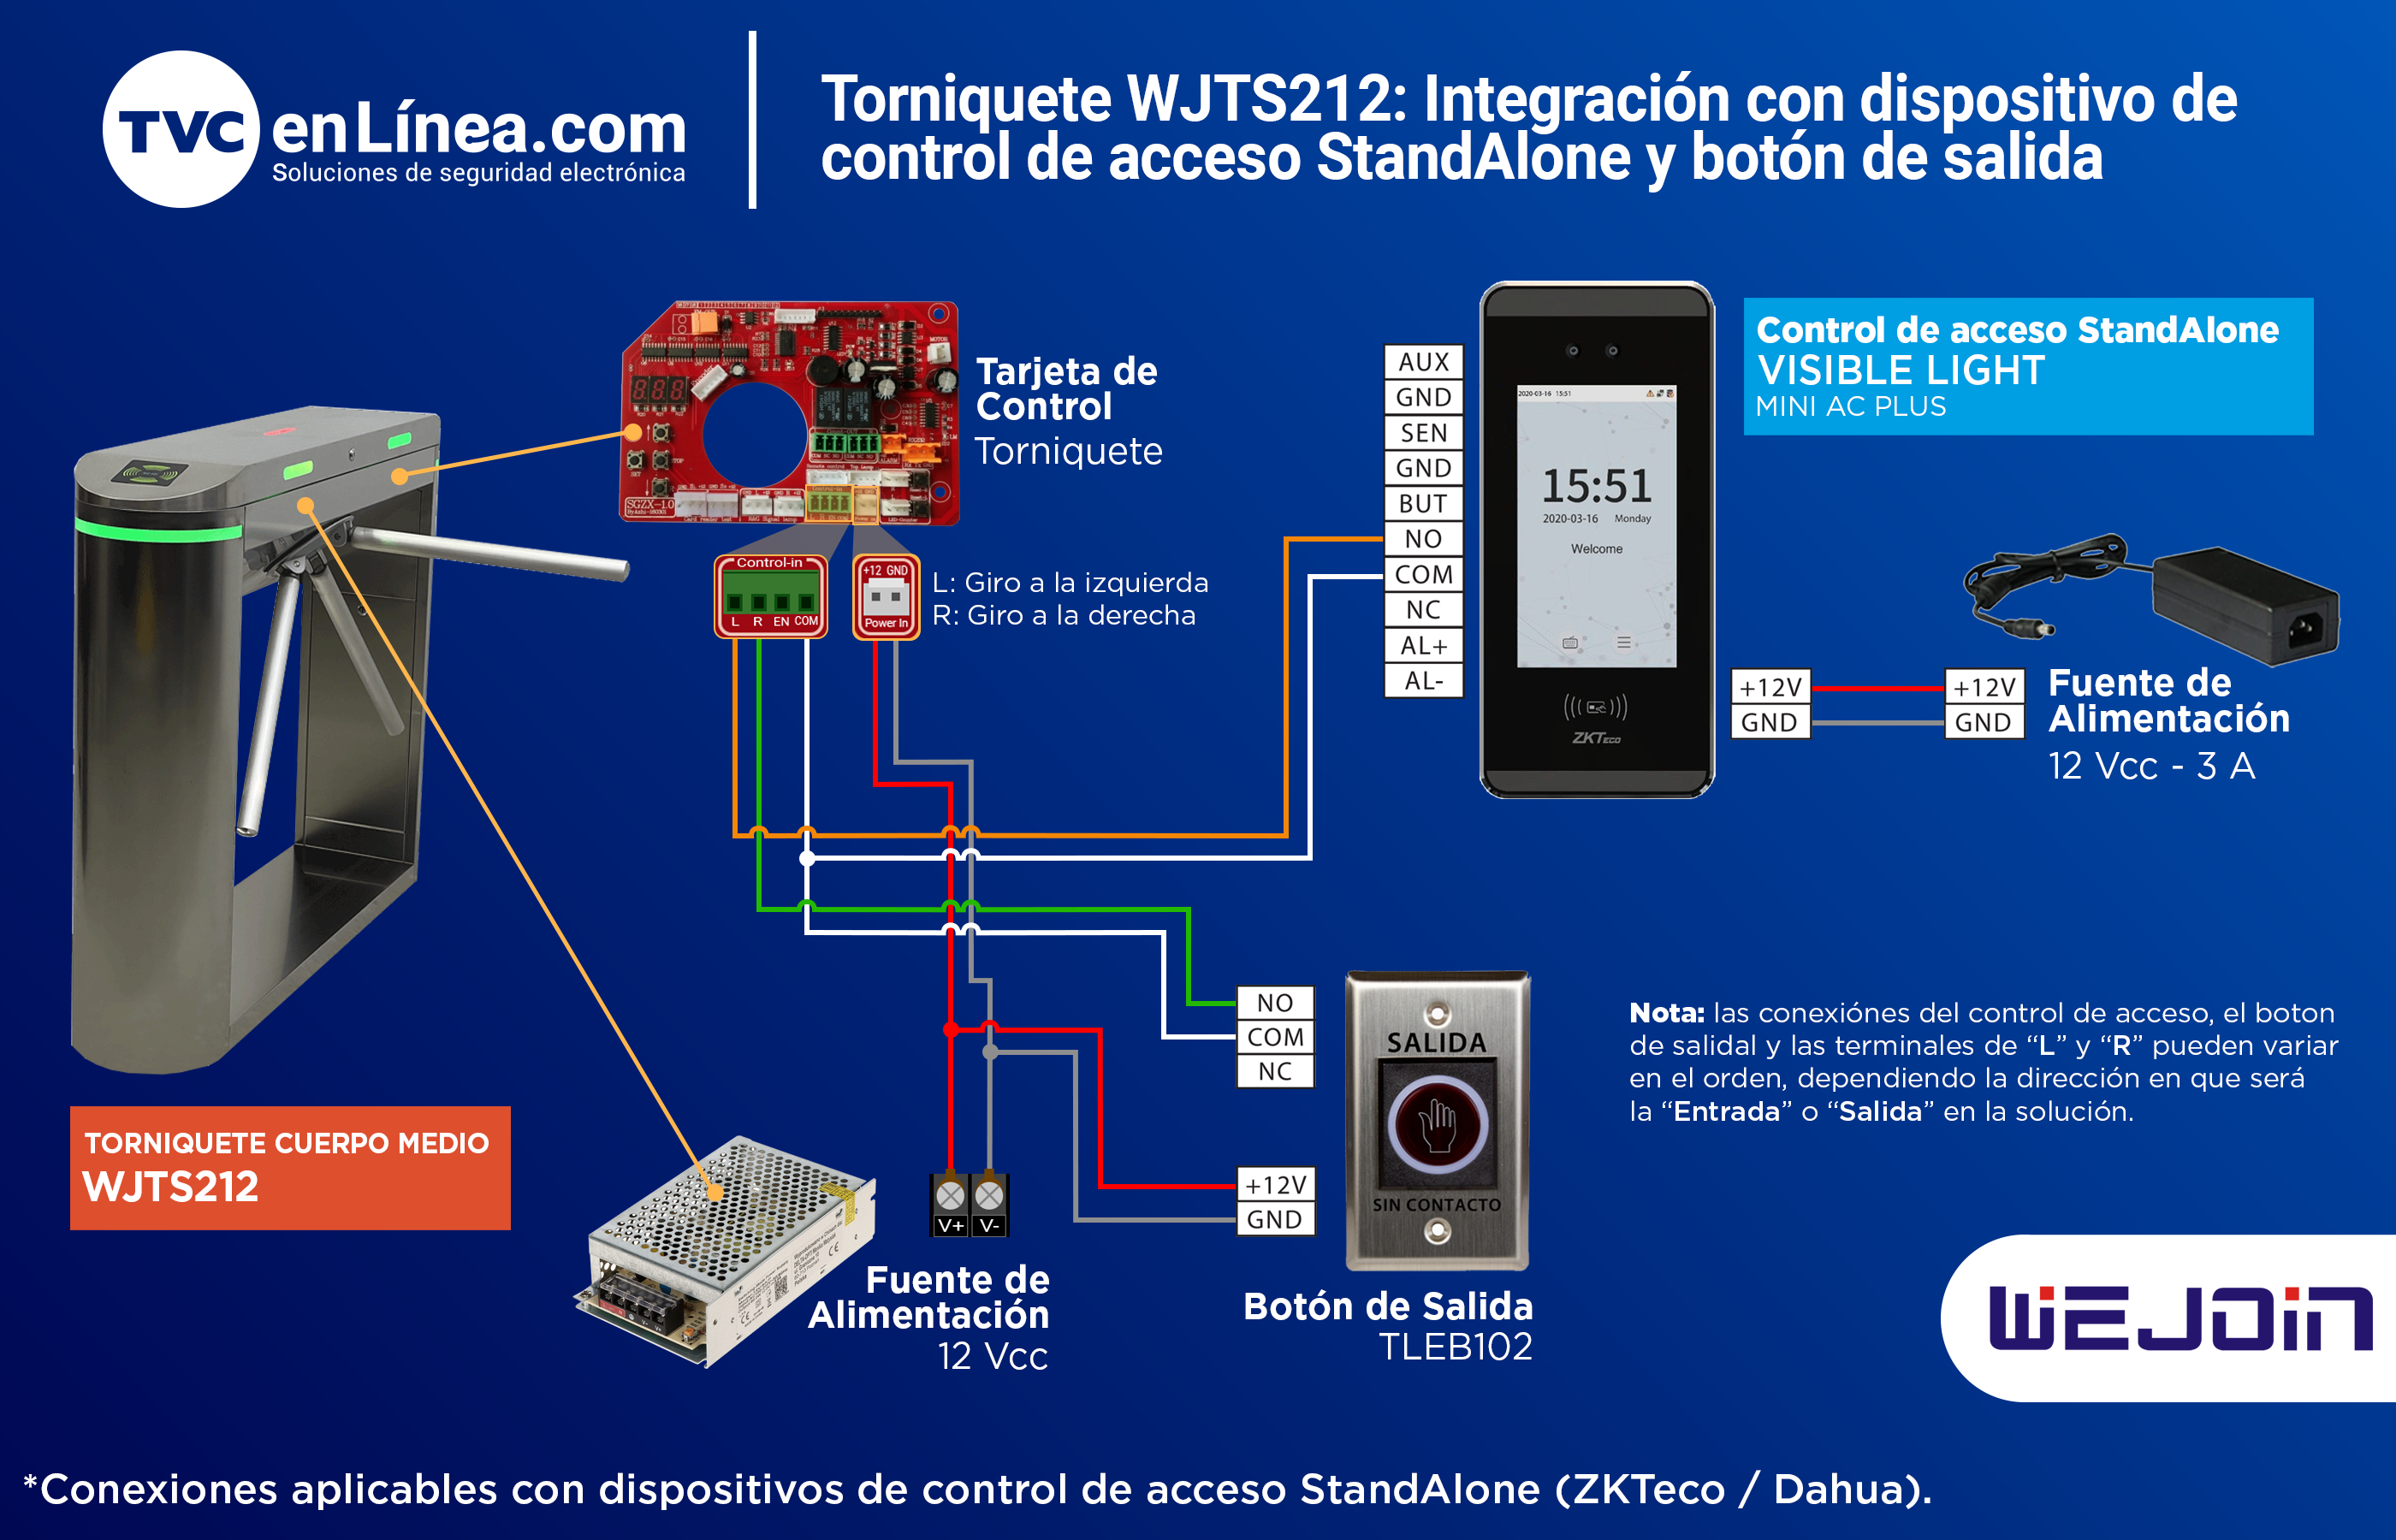 Torniquete WJTS212 control de acceso stand alone y boton de salida